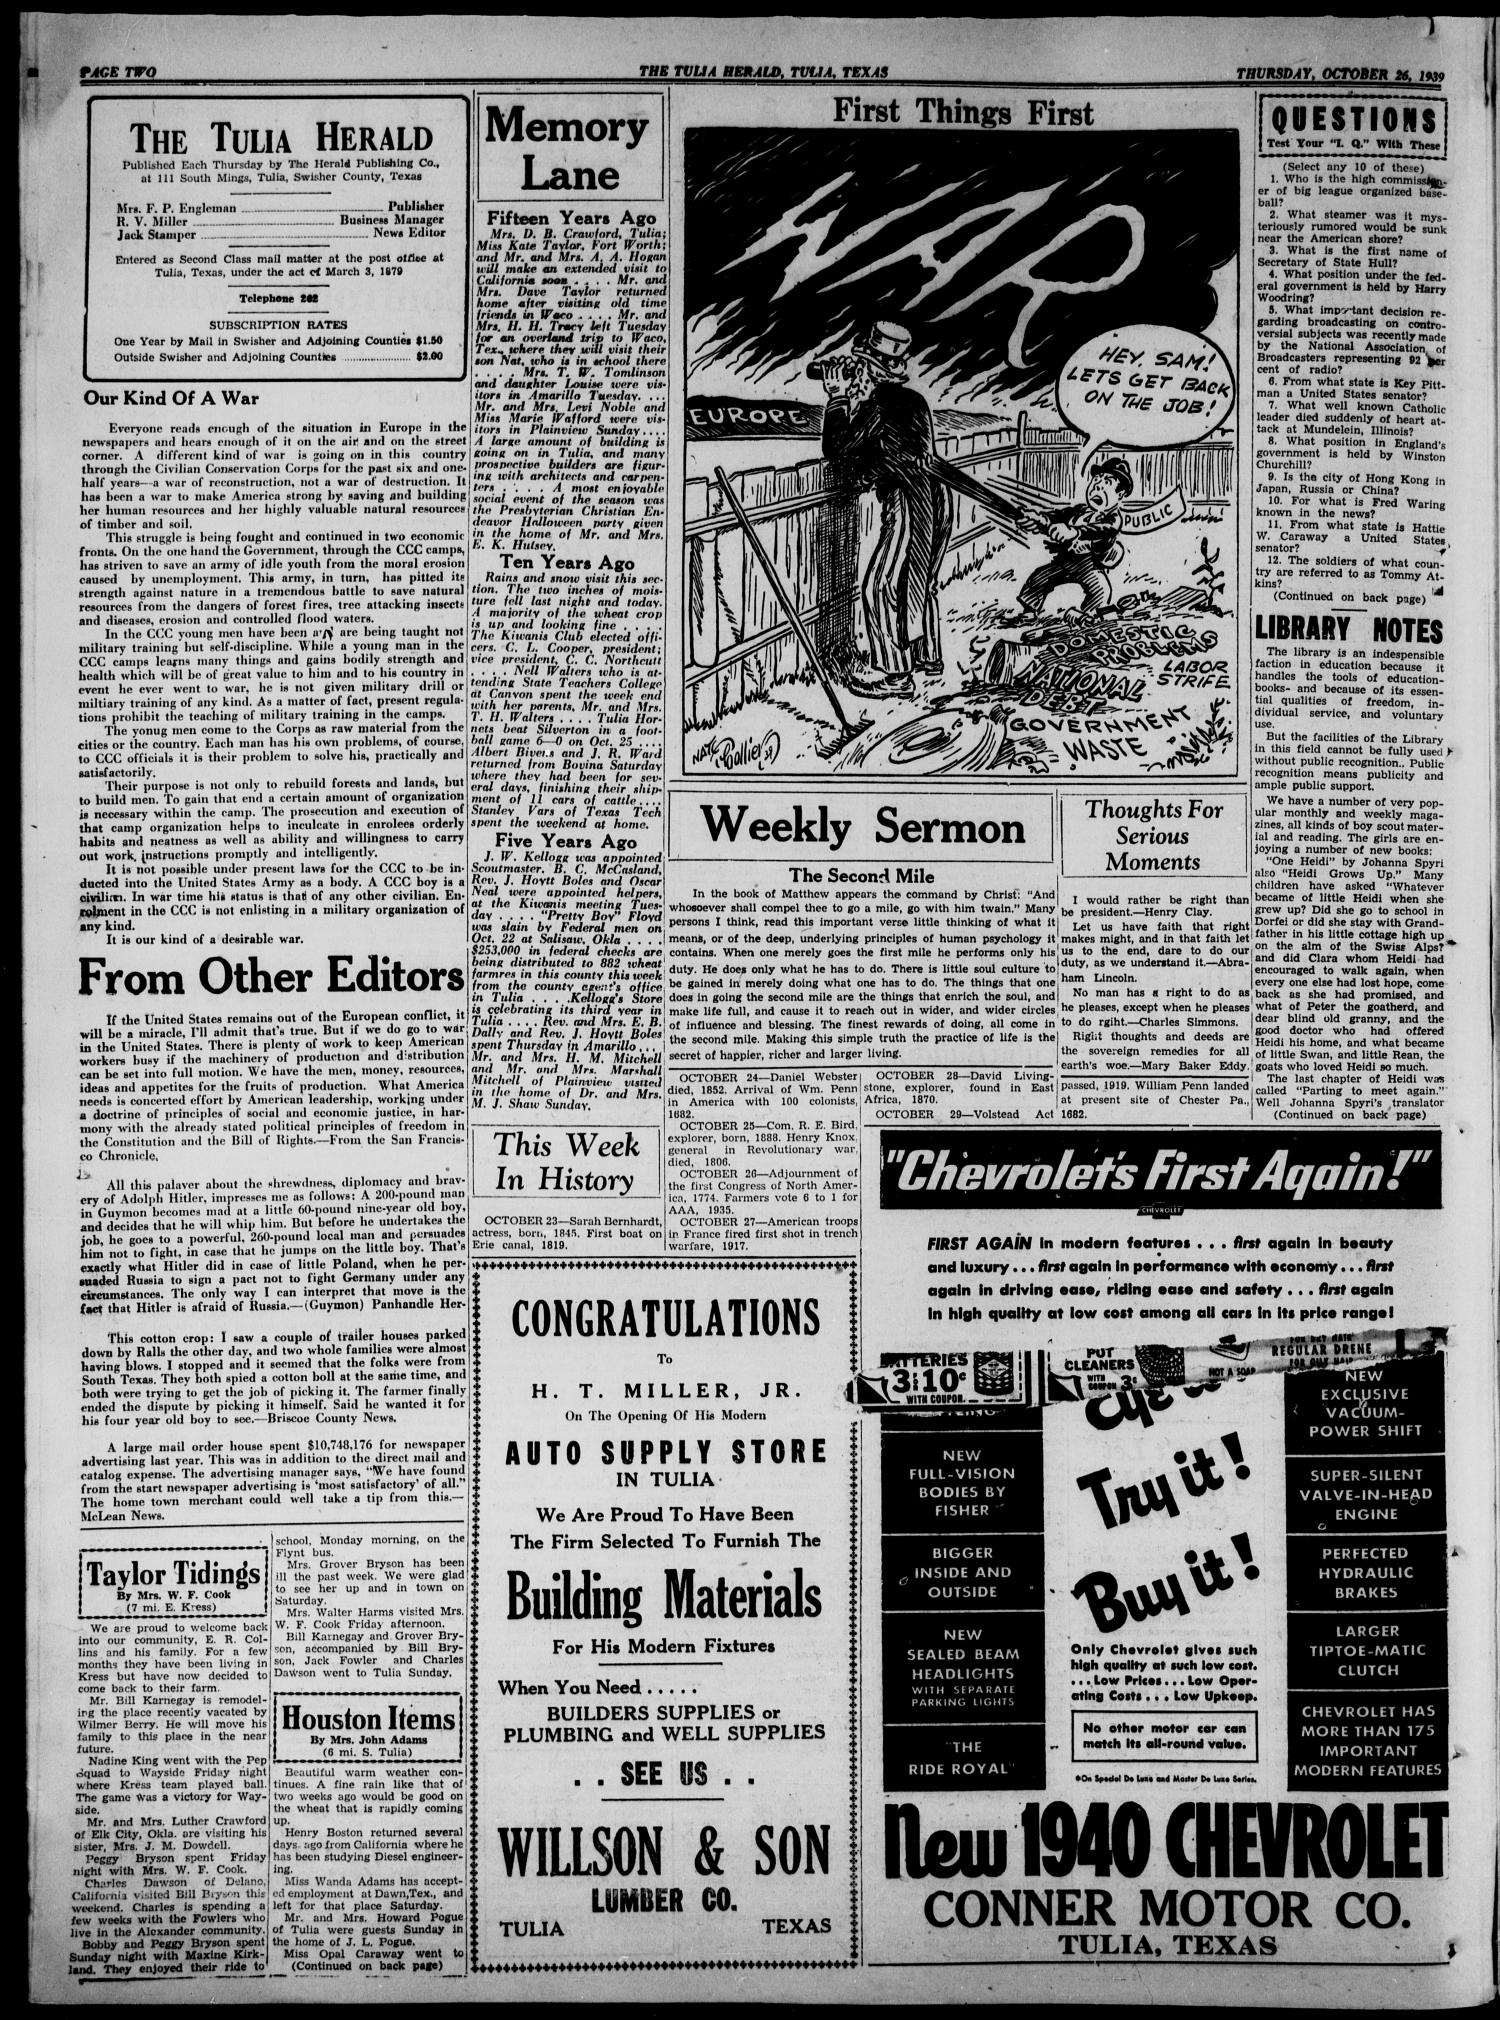 The Tulia Herald (Tulia, Tex), Vol. 30, No. 43, Ed. 1, Thursday, October 26, 1939
                                                
                                                    2
                                                